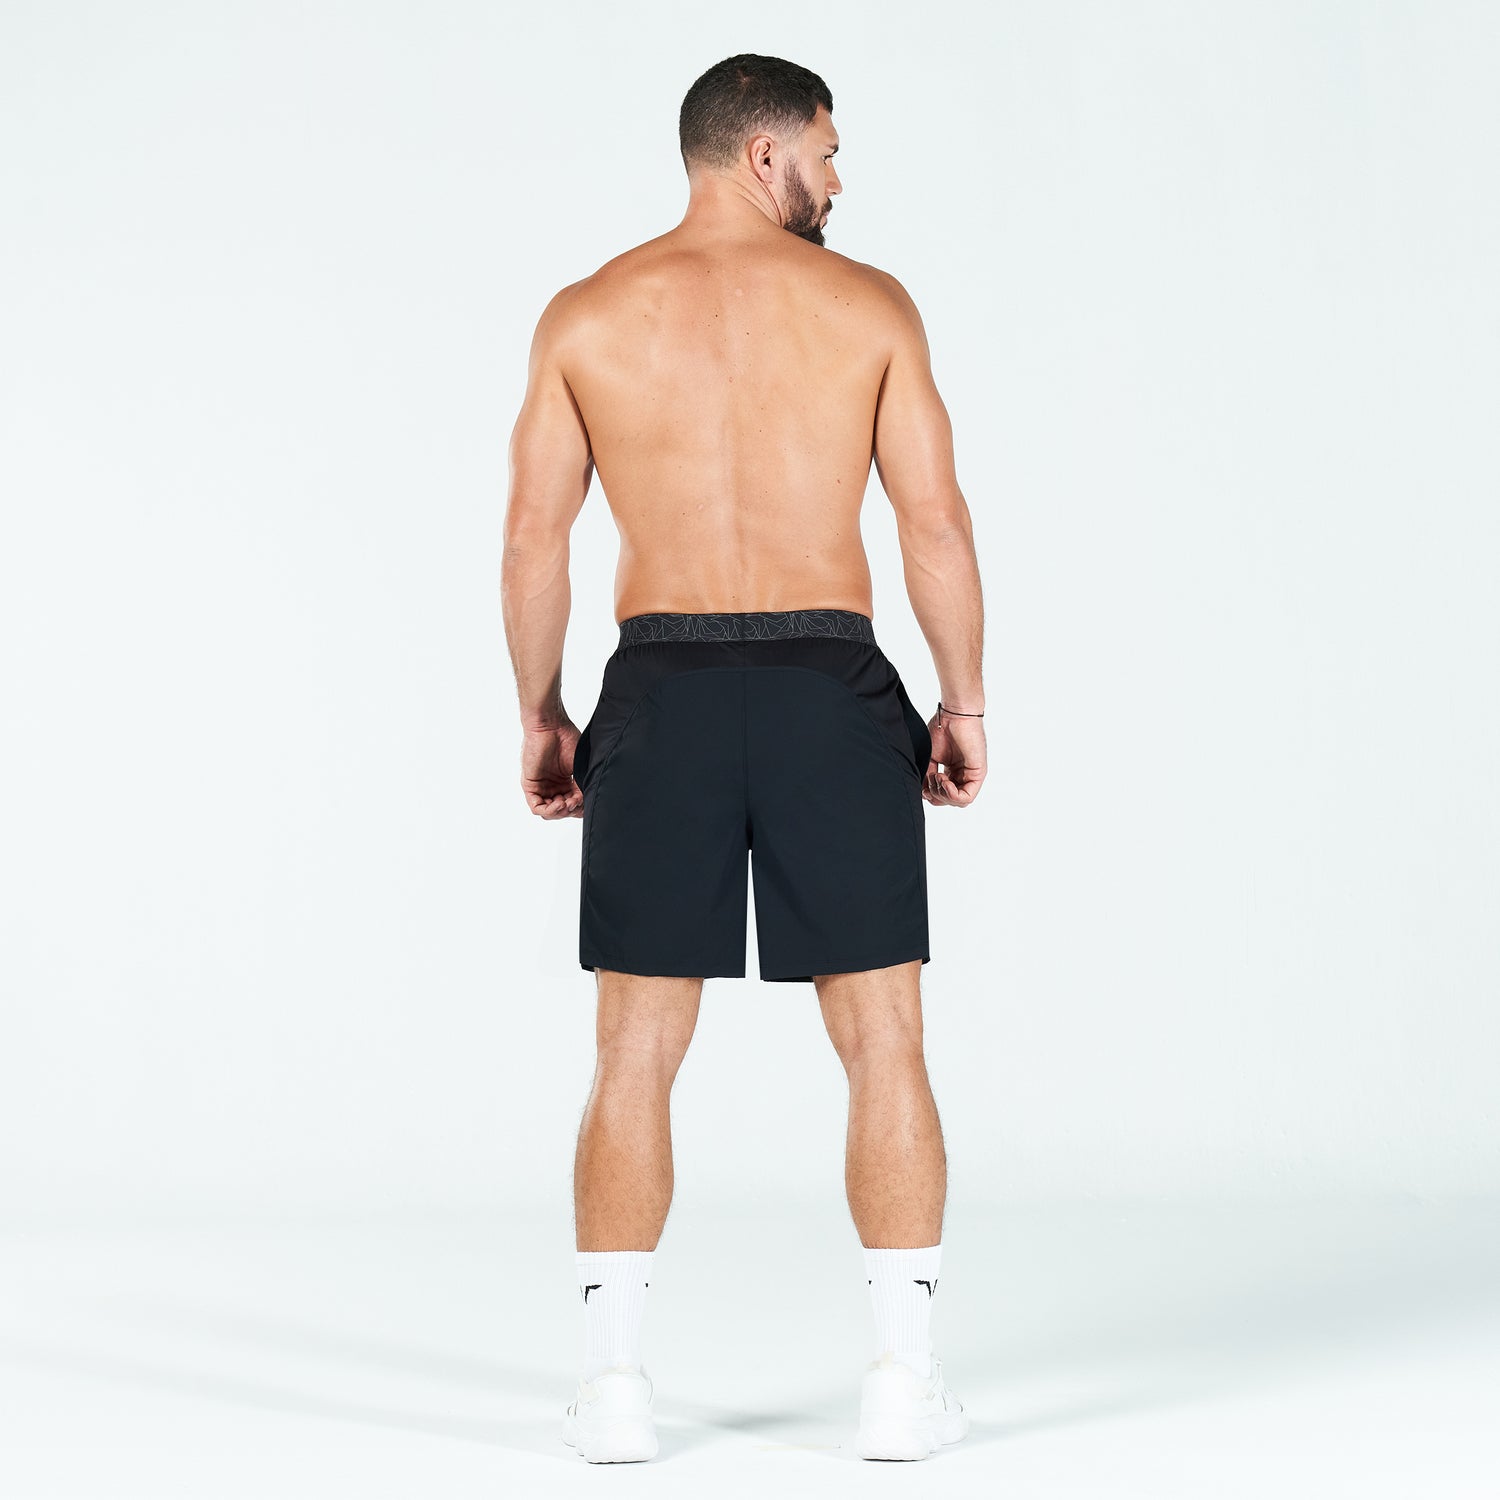 squatwolf-gym-wear-core-7-aerotech-shorts-black-workout-short-for-men